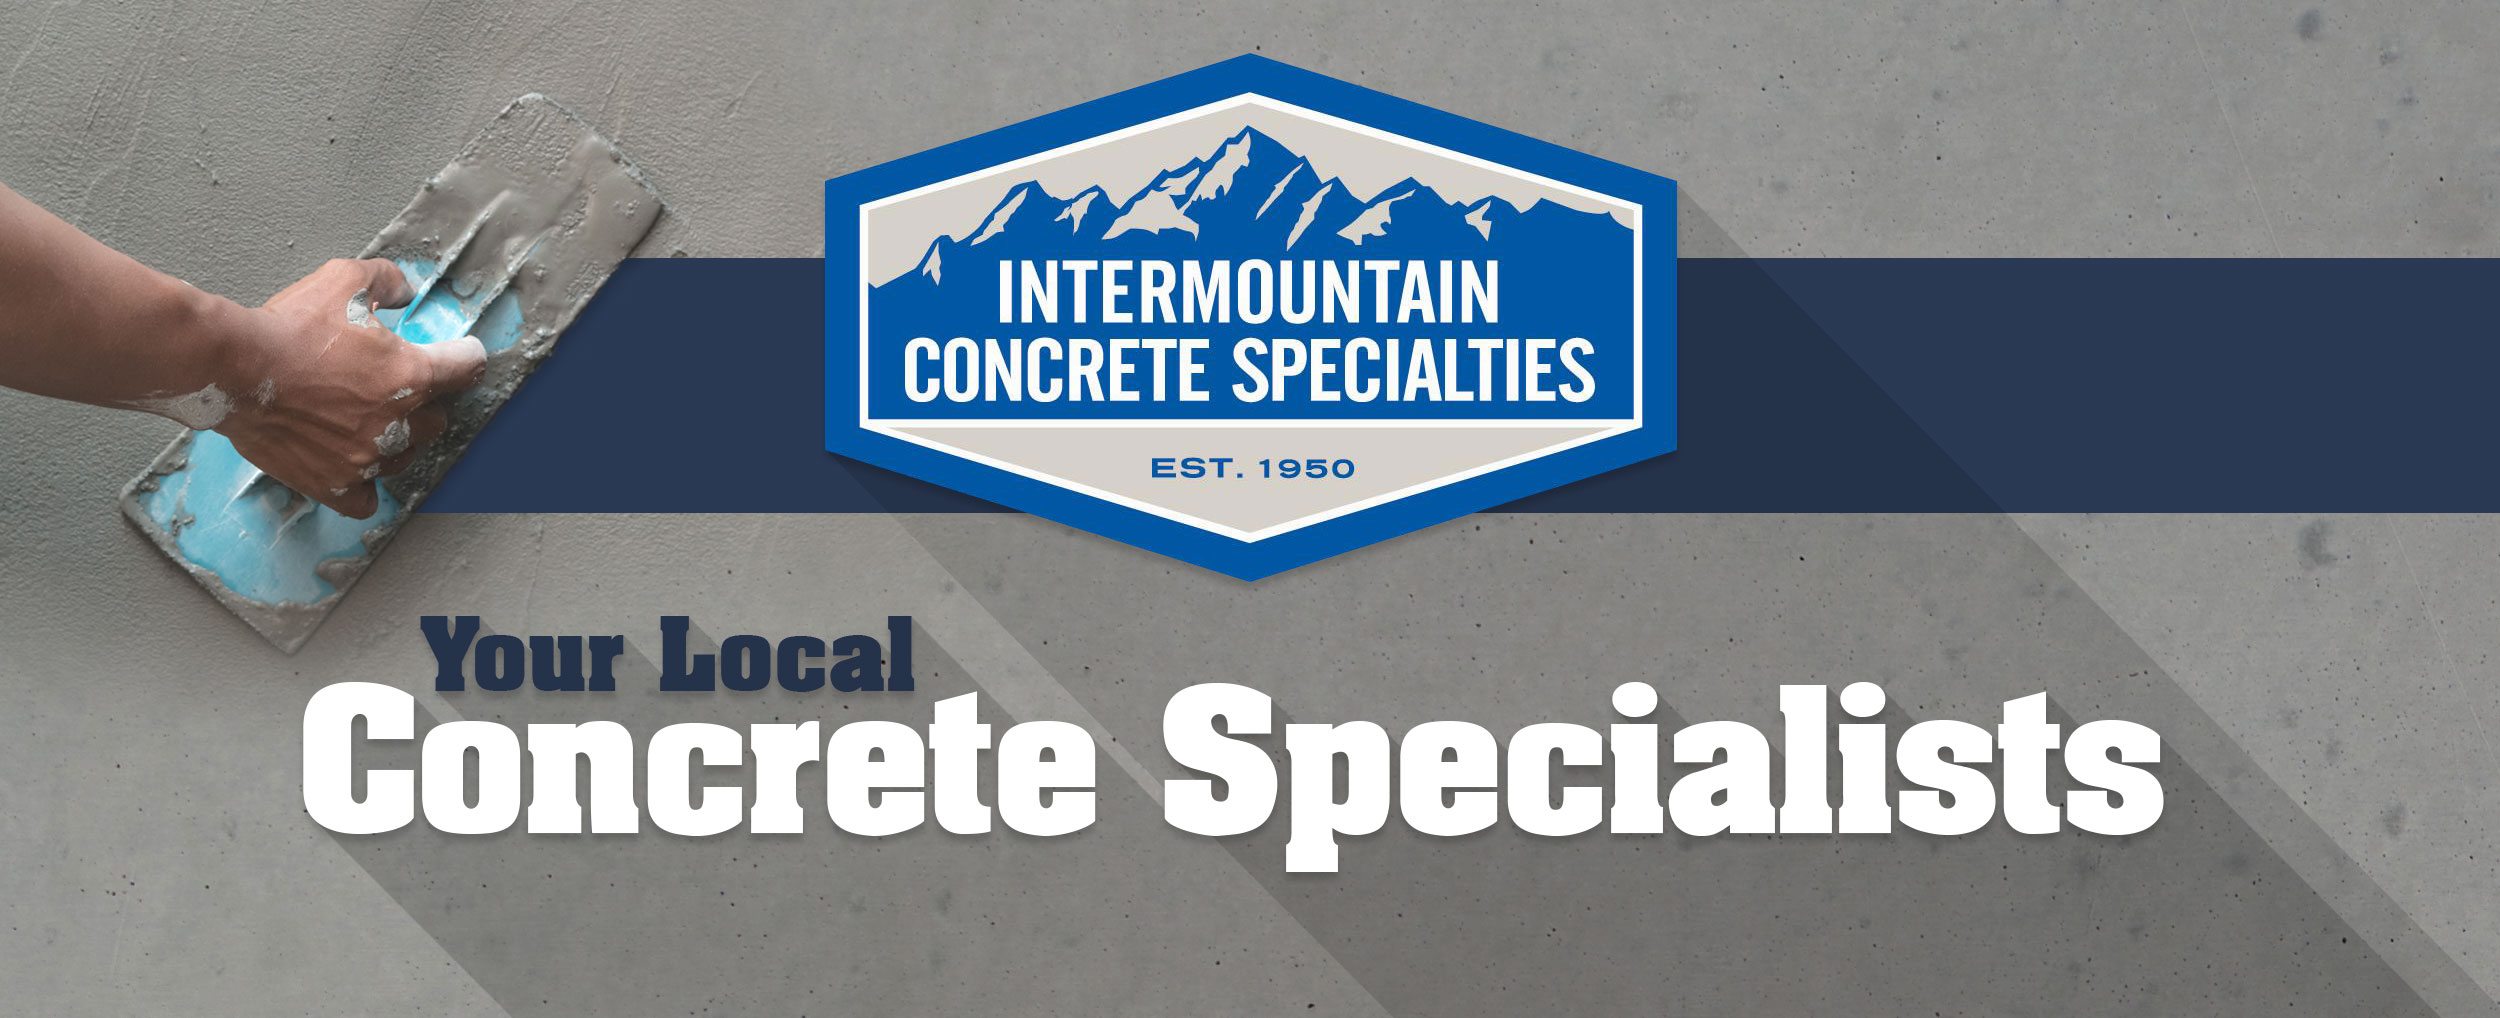 Intermountain Concrete Specialties banner image